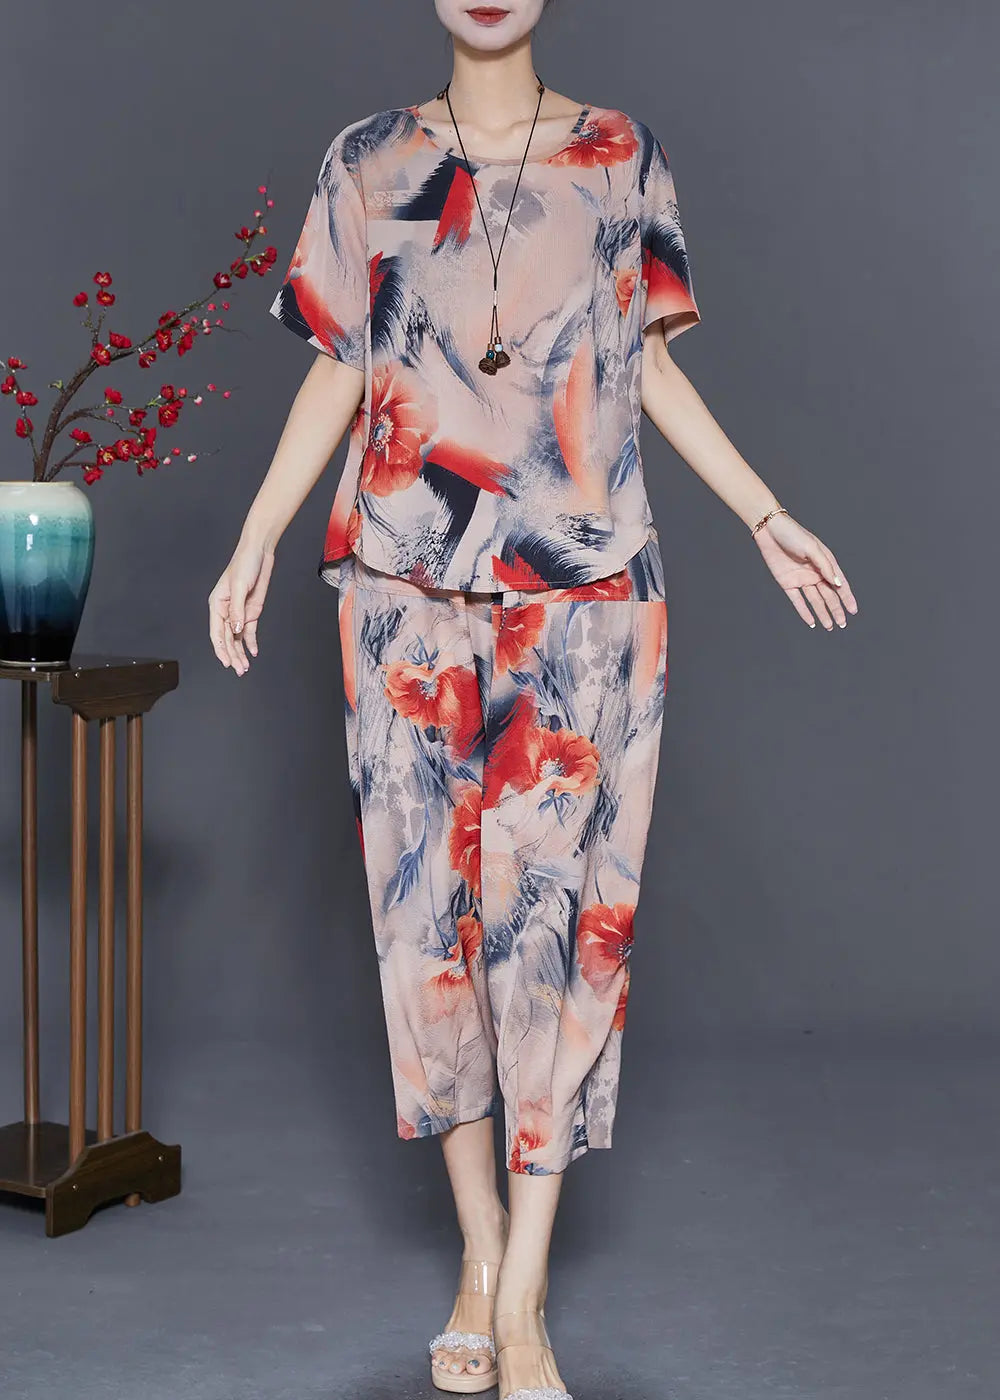 Classy Khaki Oversized Print Linen Two Piece Set Outfits Summer Ada Fashion